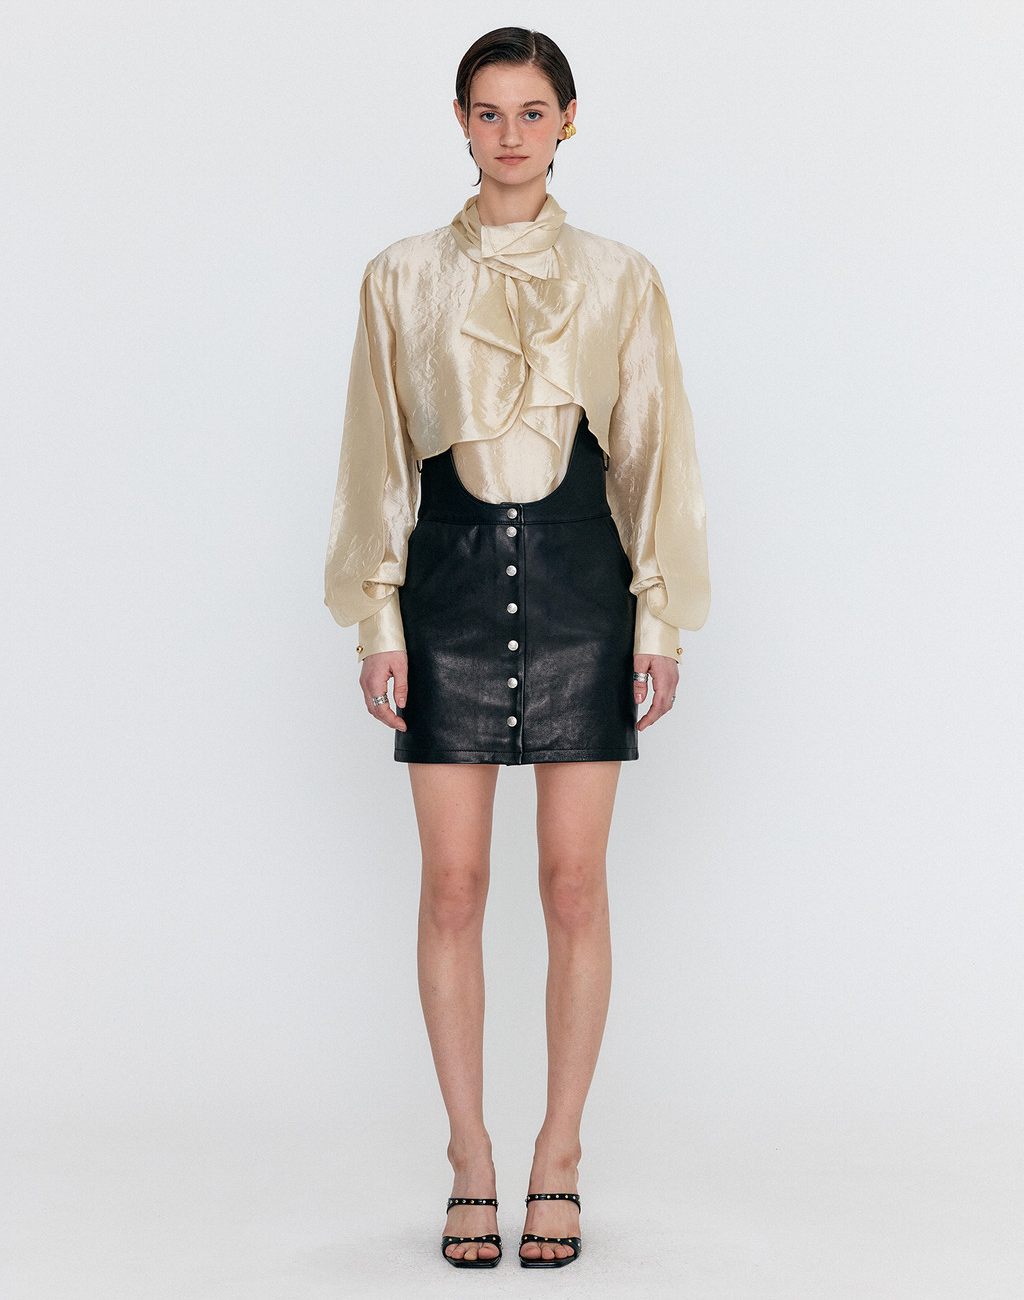 WEBRINA Corset High-Rise Leather Mini Skirt - Black